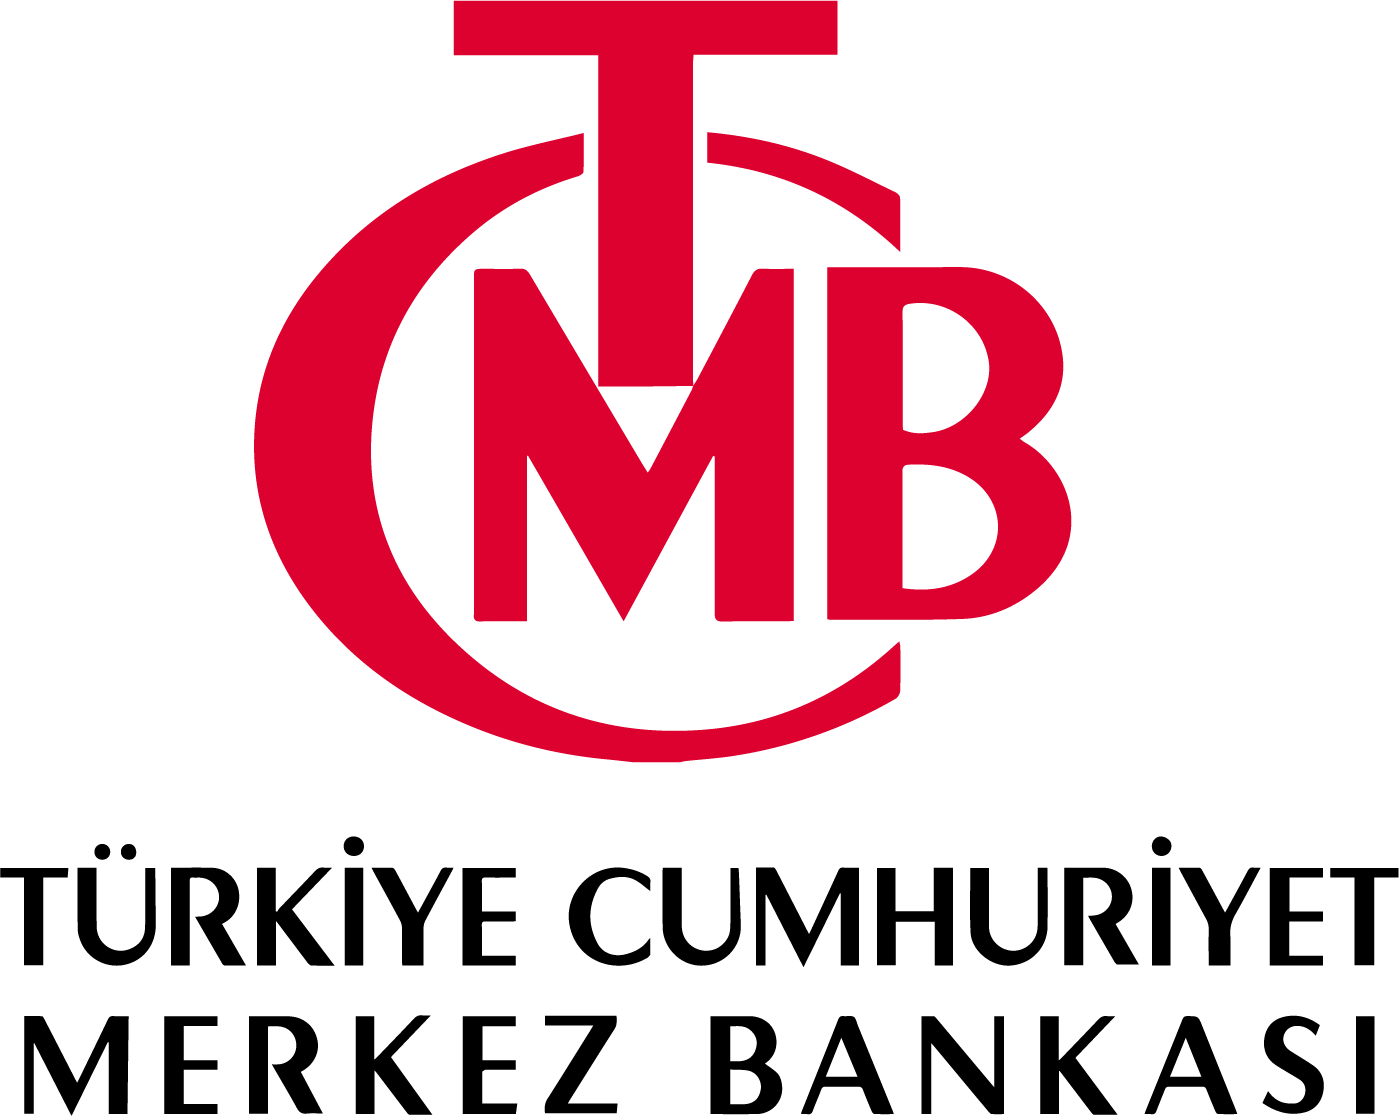 tcmb-logo-1@4x